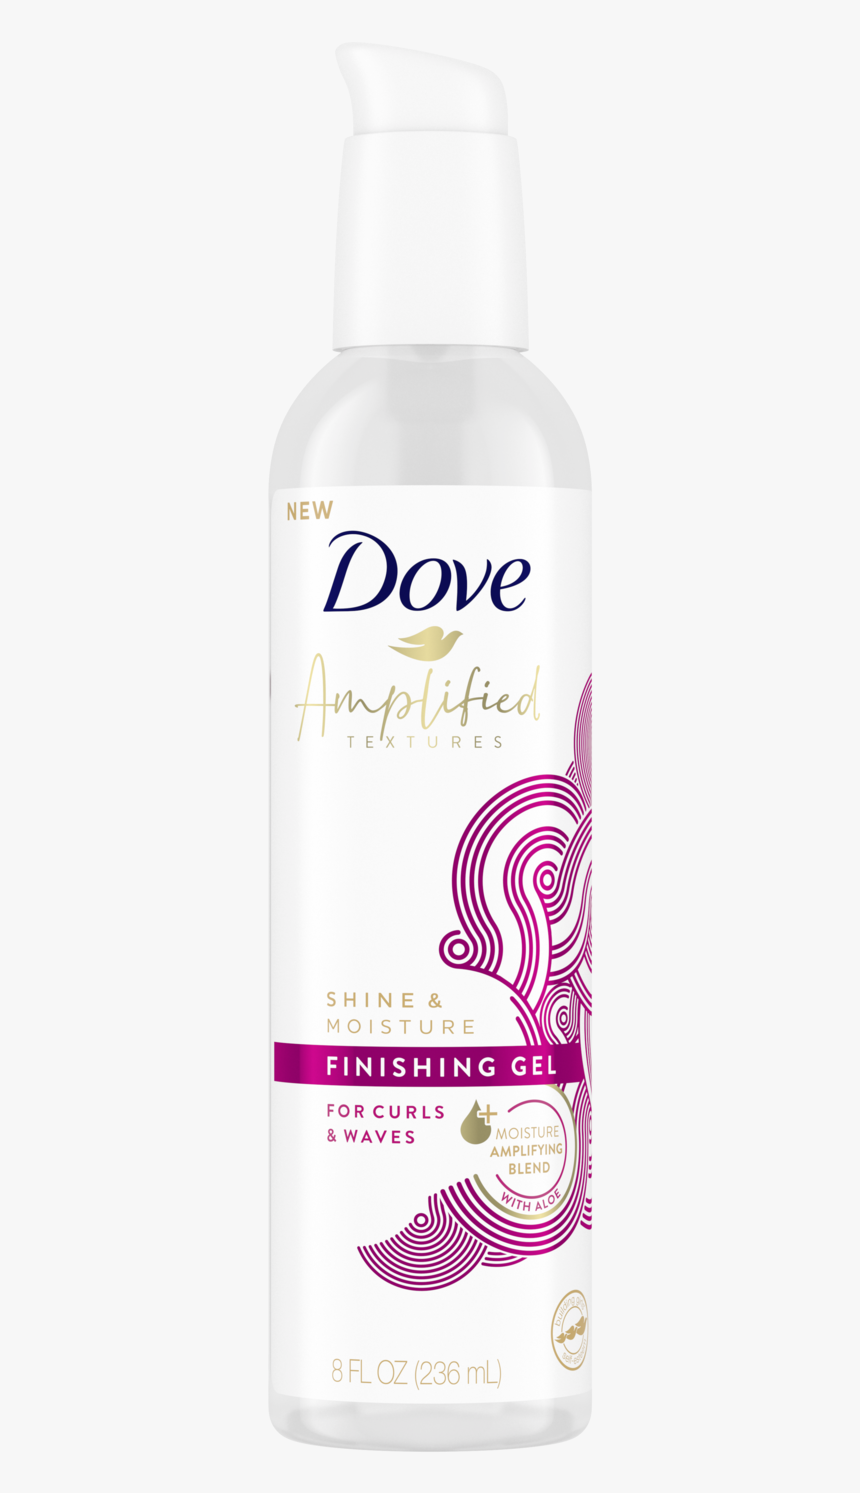 Dove Amplified Textures Shine & Moisture Finishing - Dove Amplified Textures, HD Png Download, Free Download